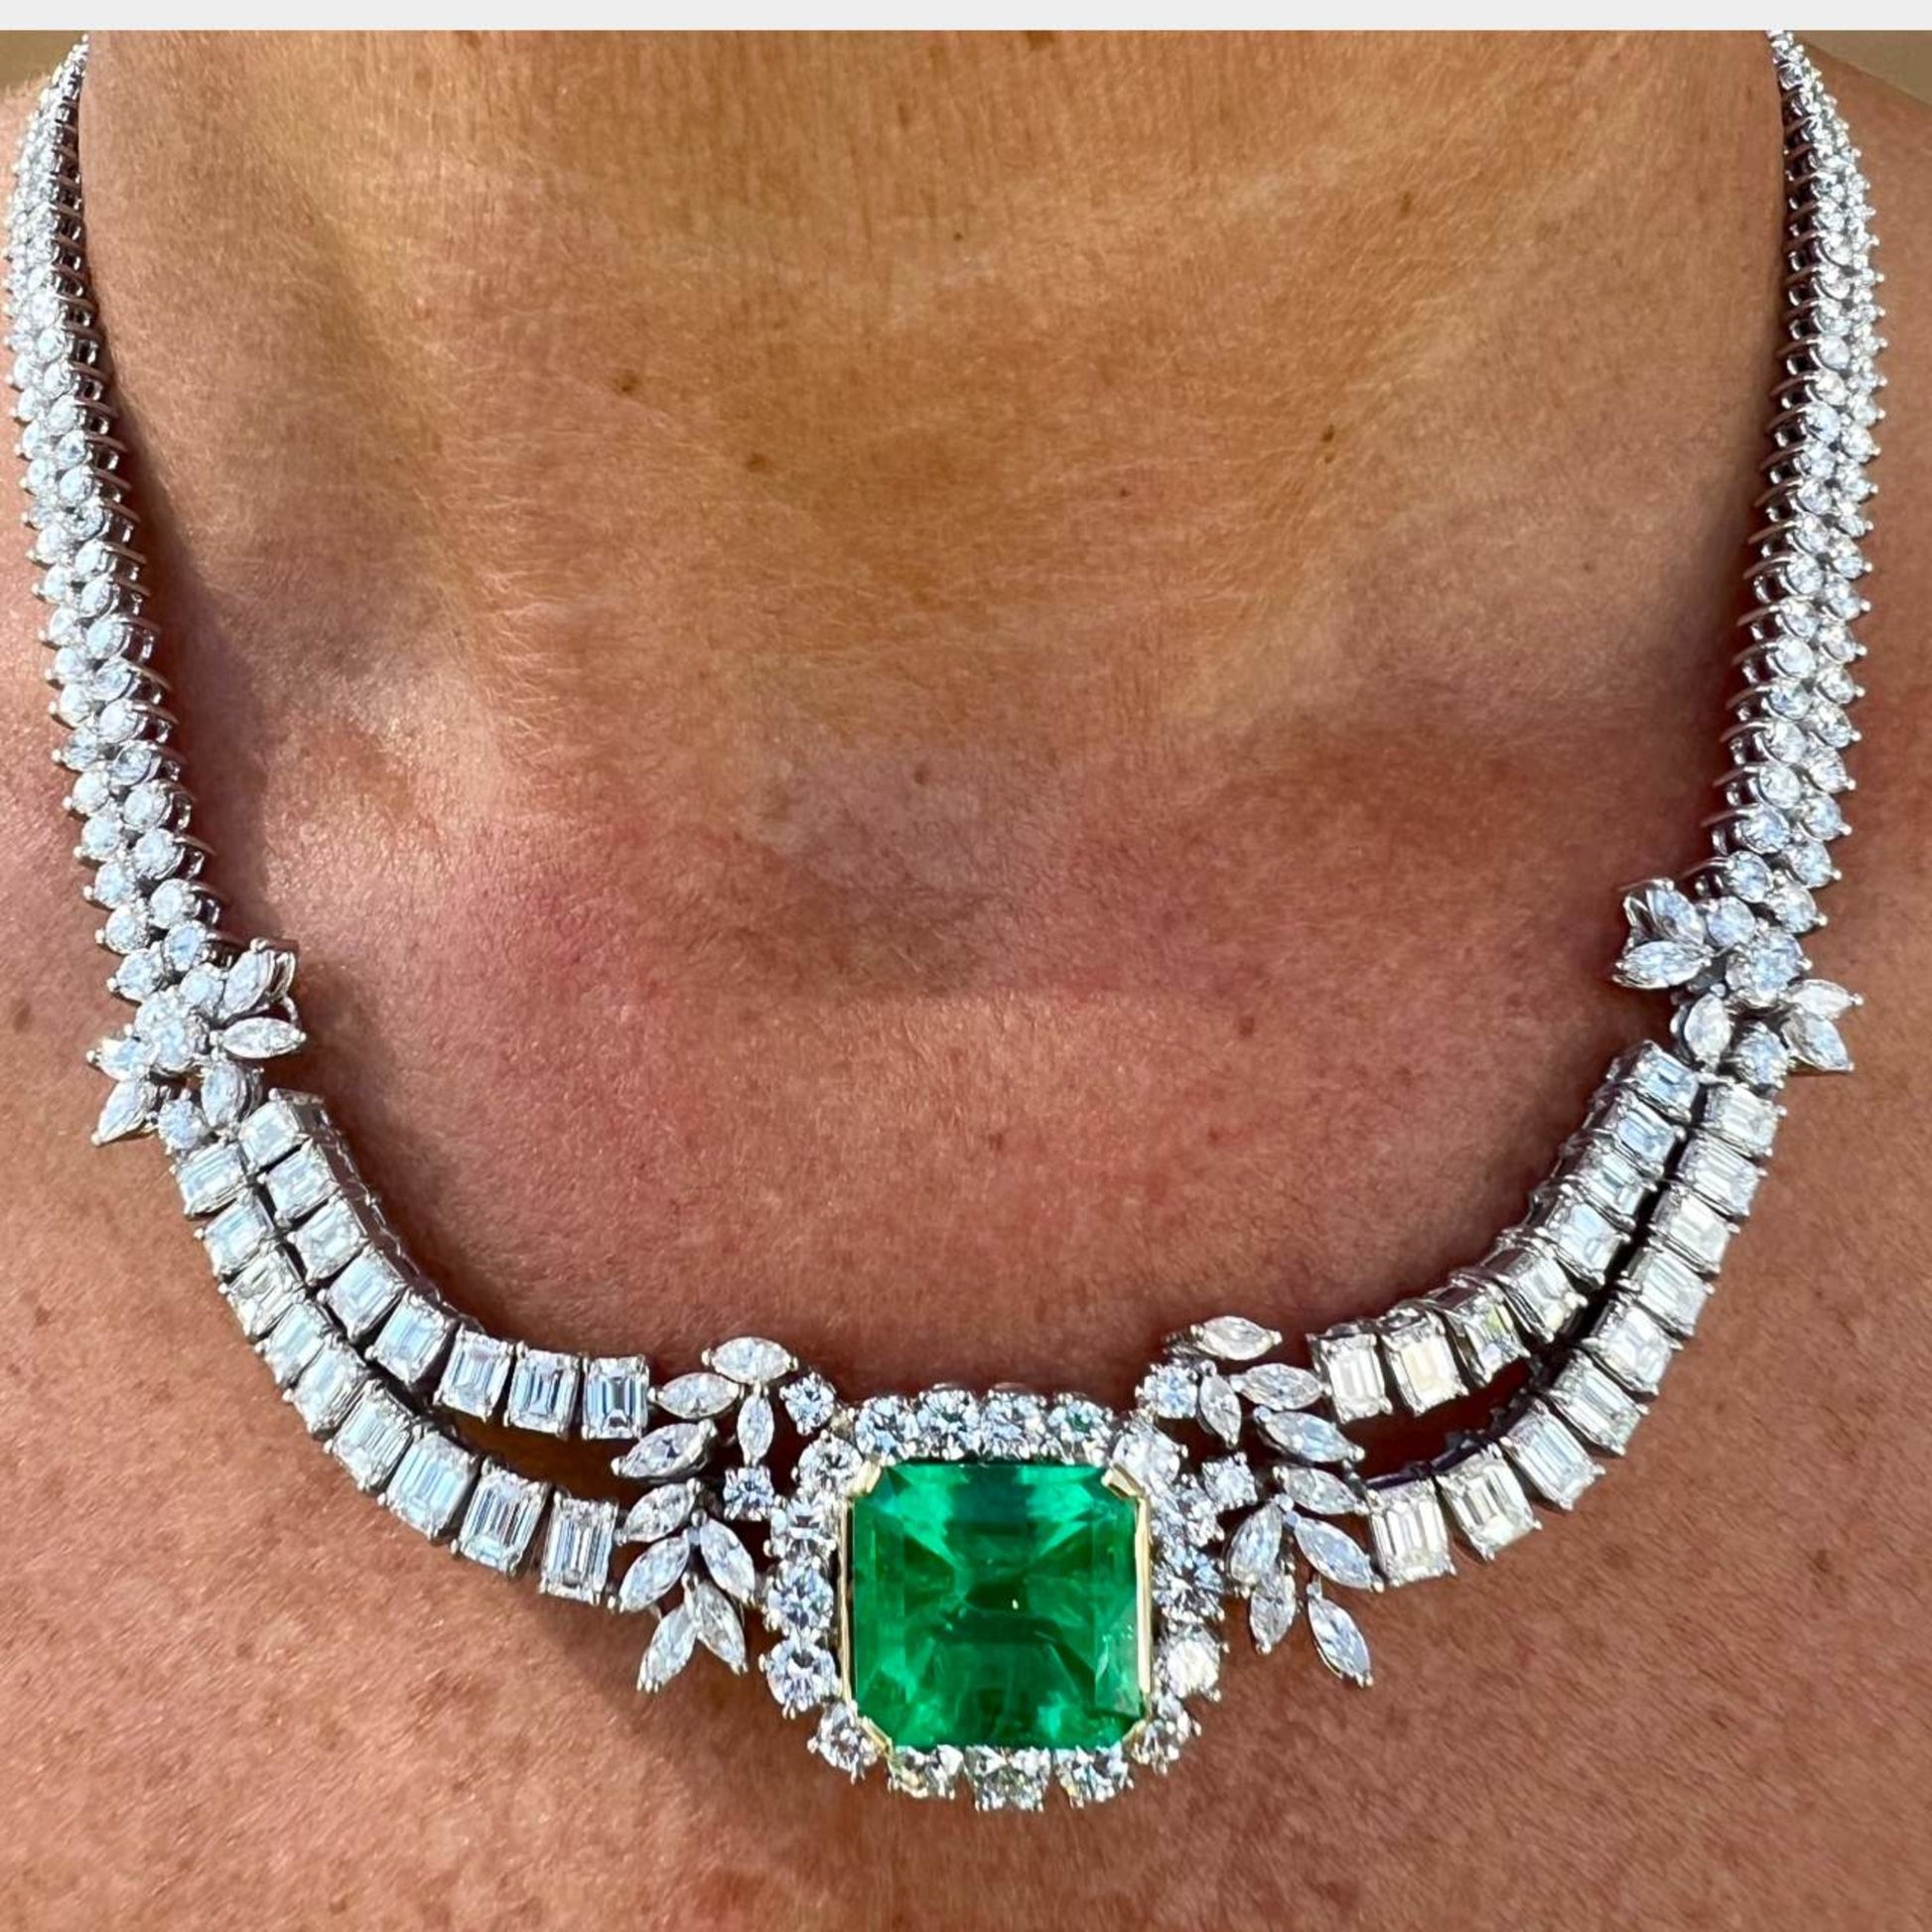 1950s 18KT White Gold Emerald & Diamond Necklace on neck